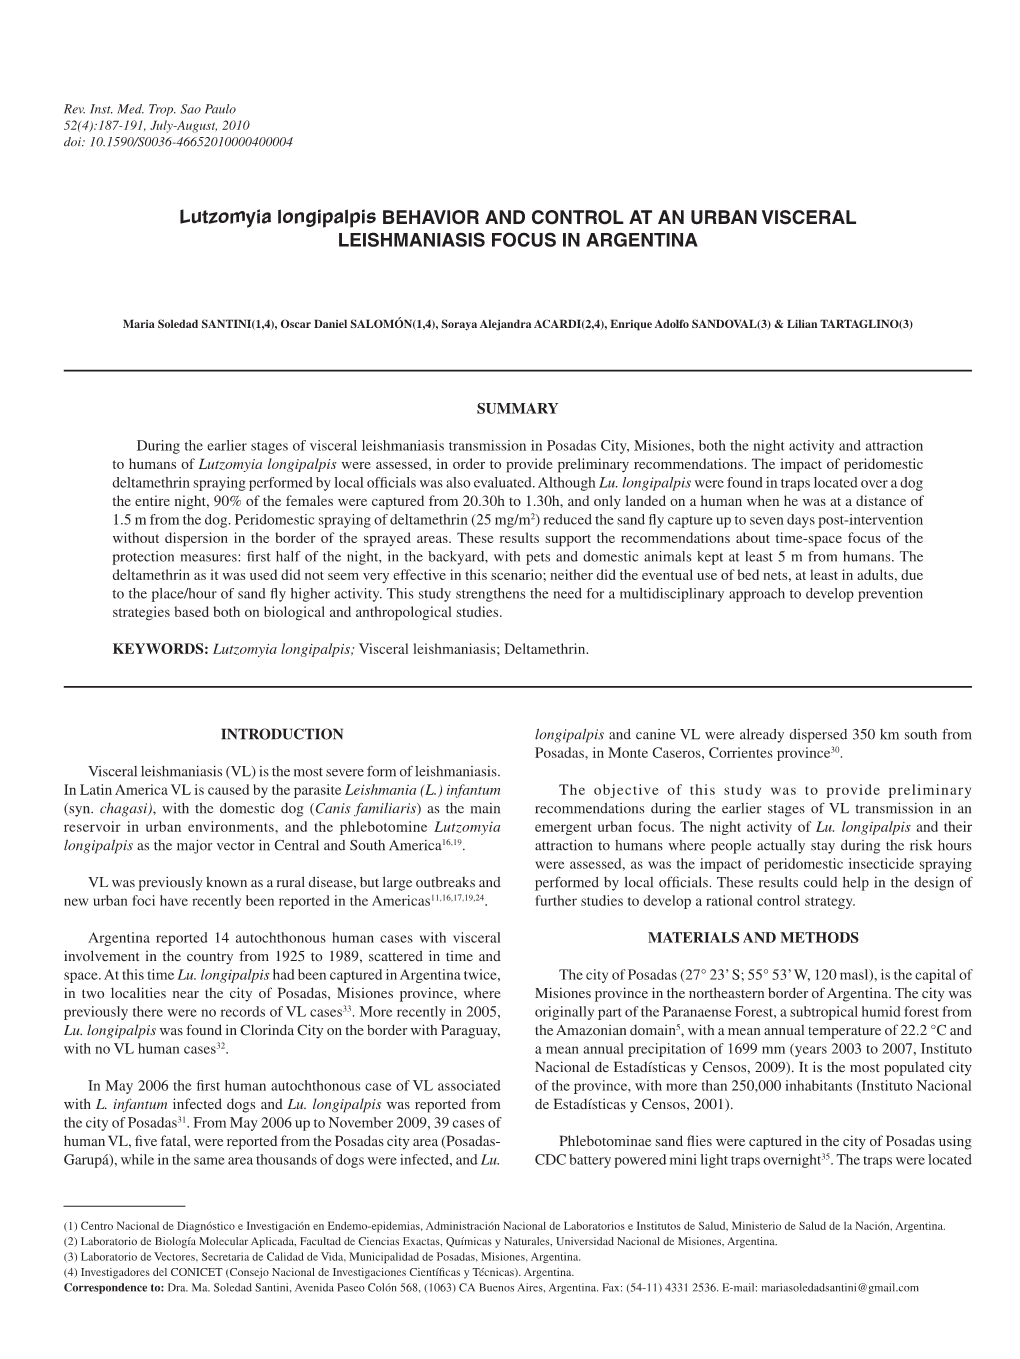 Lutzomyia Longipalpis BEHAVIOR and CONTROL at an URBAN VISCERAL LEISHMANIASIS FOCUS in ARGENTINA